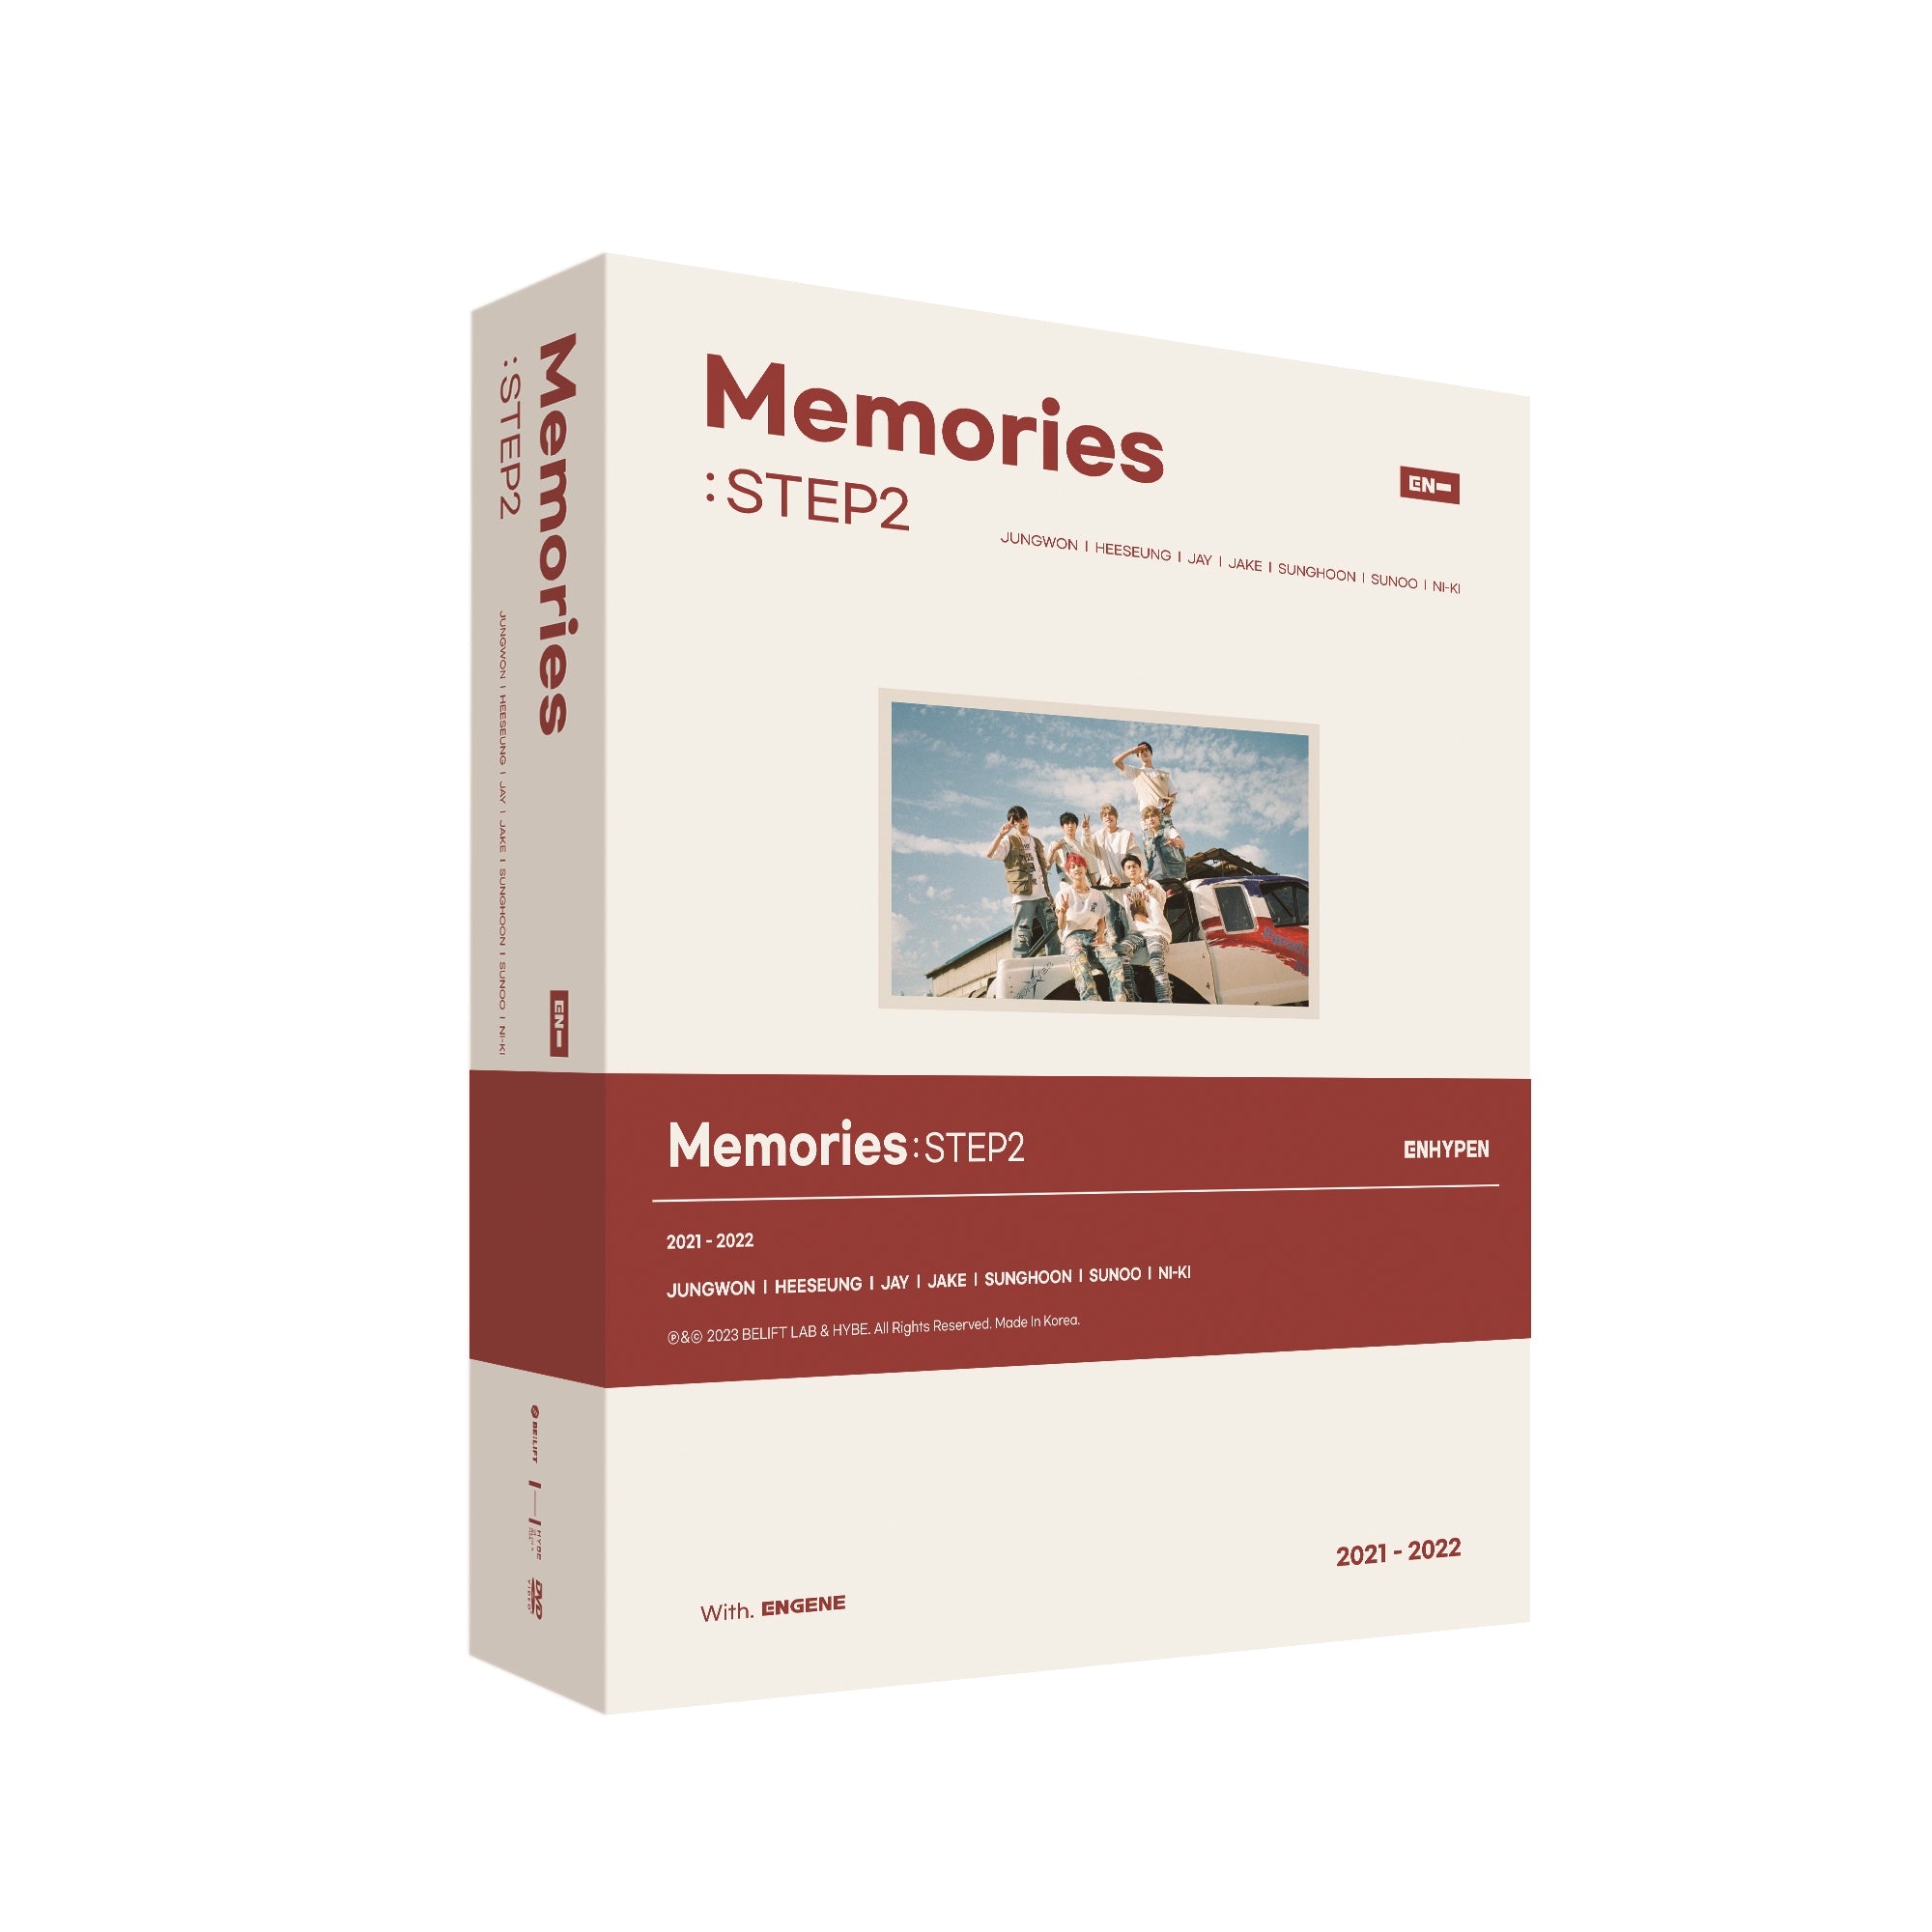 ENHYPEN - Memories : STEP 2 DVD